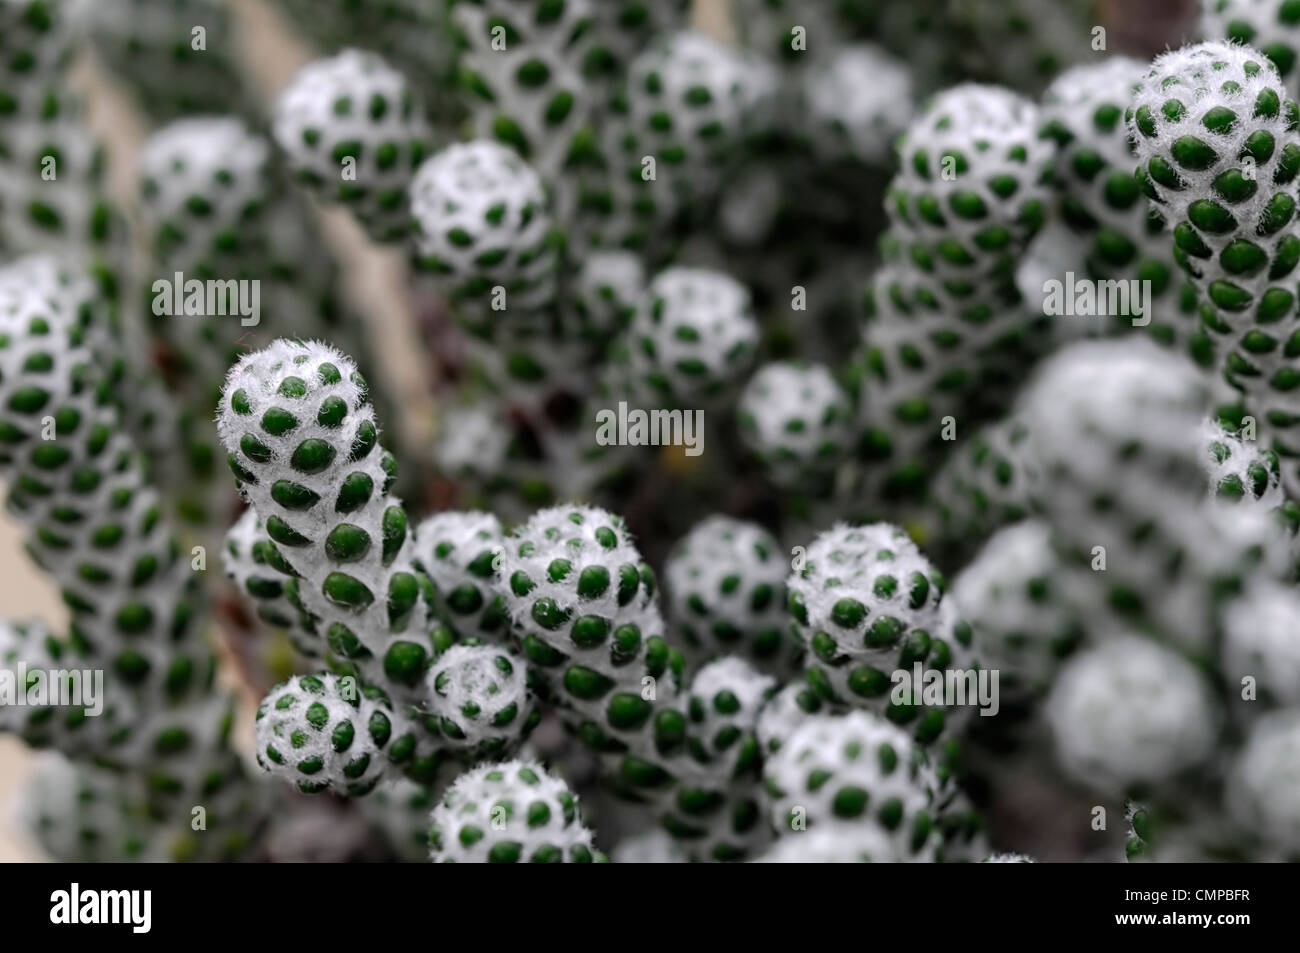 Ozothamnus Coralloides Agm Immergrün immergrüne Sträucher Pflanzen Porträts Closeup selektiven Fokus silbernes grauen Laub Blätter Stockfoto